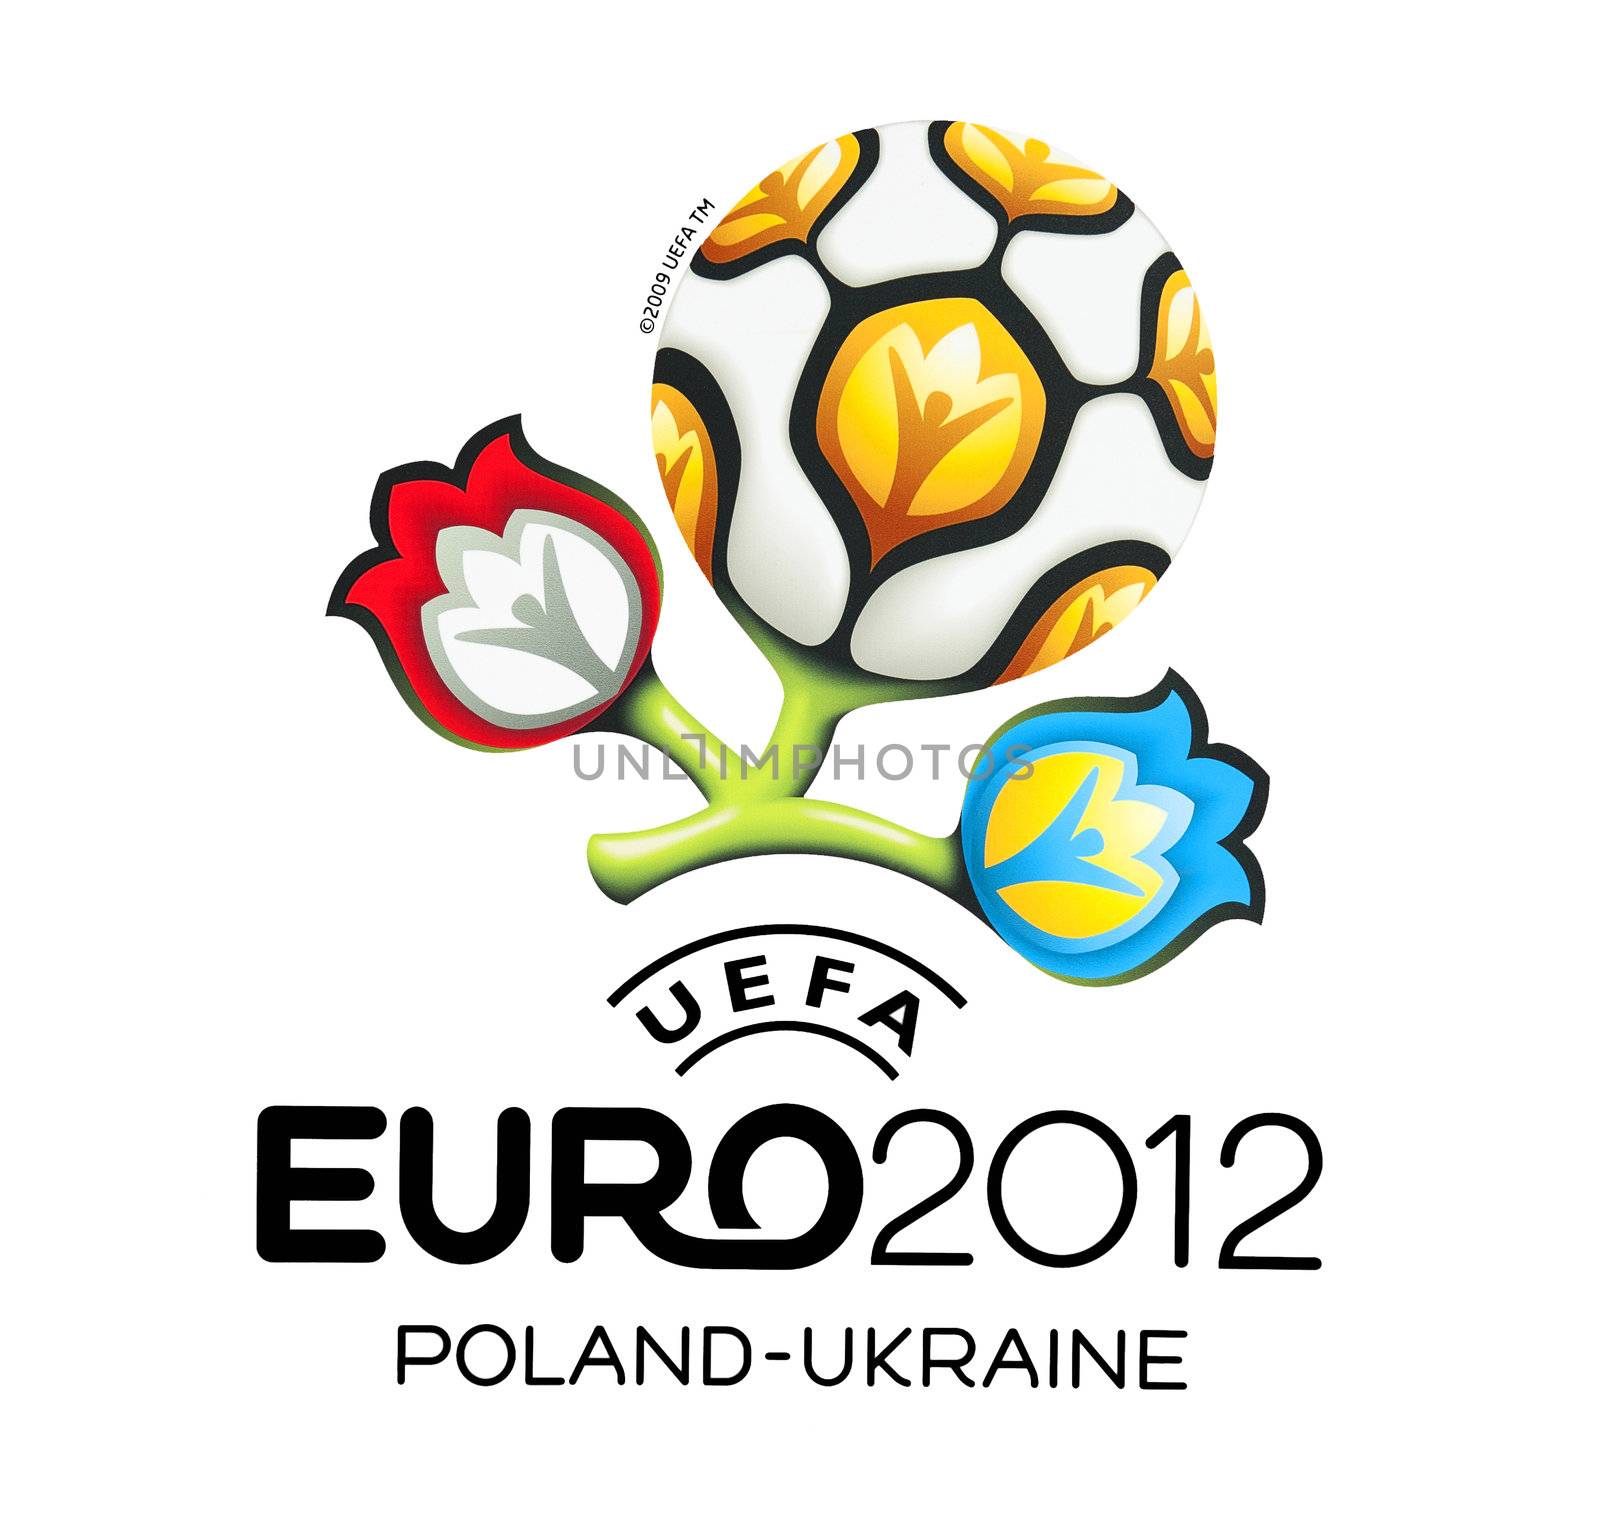 GDANSK, POLAND - MAY 1: Official logo for UEFA EURO 2012, Gdansk, Poland, May 1, 2012